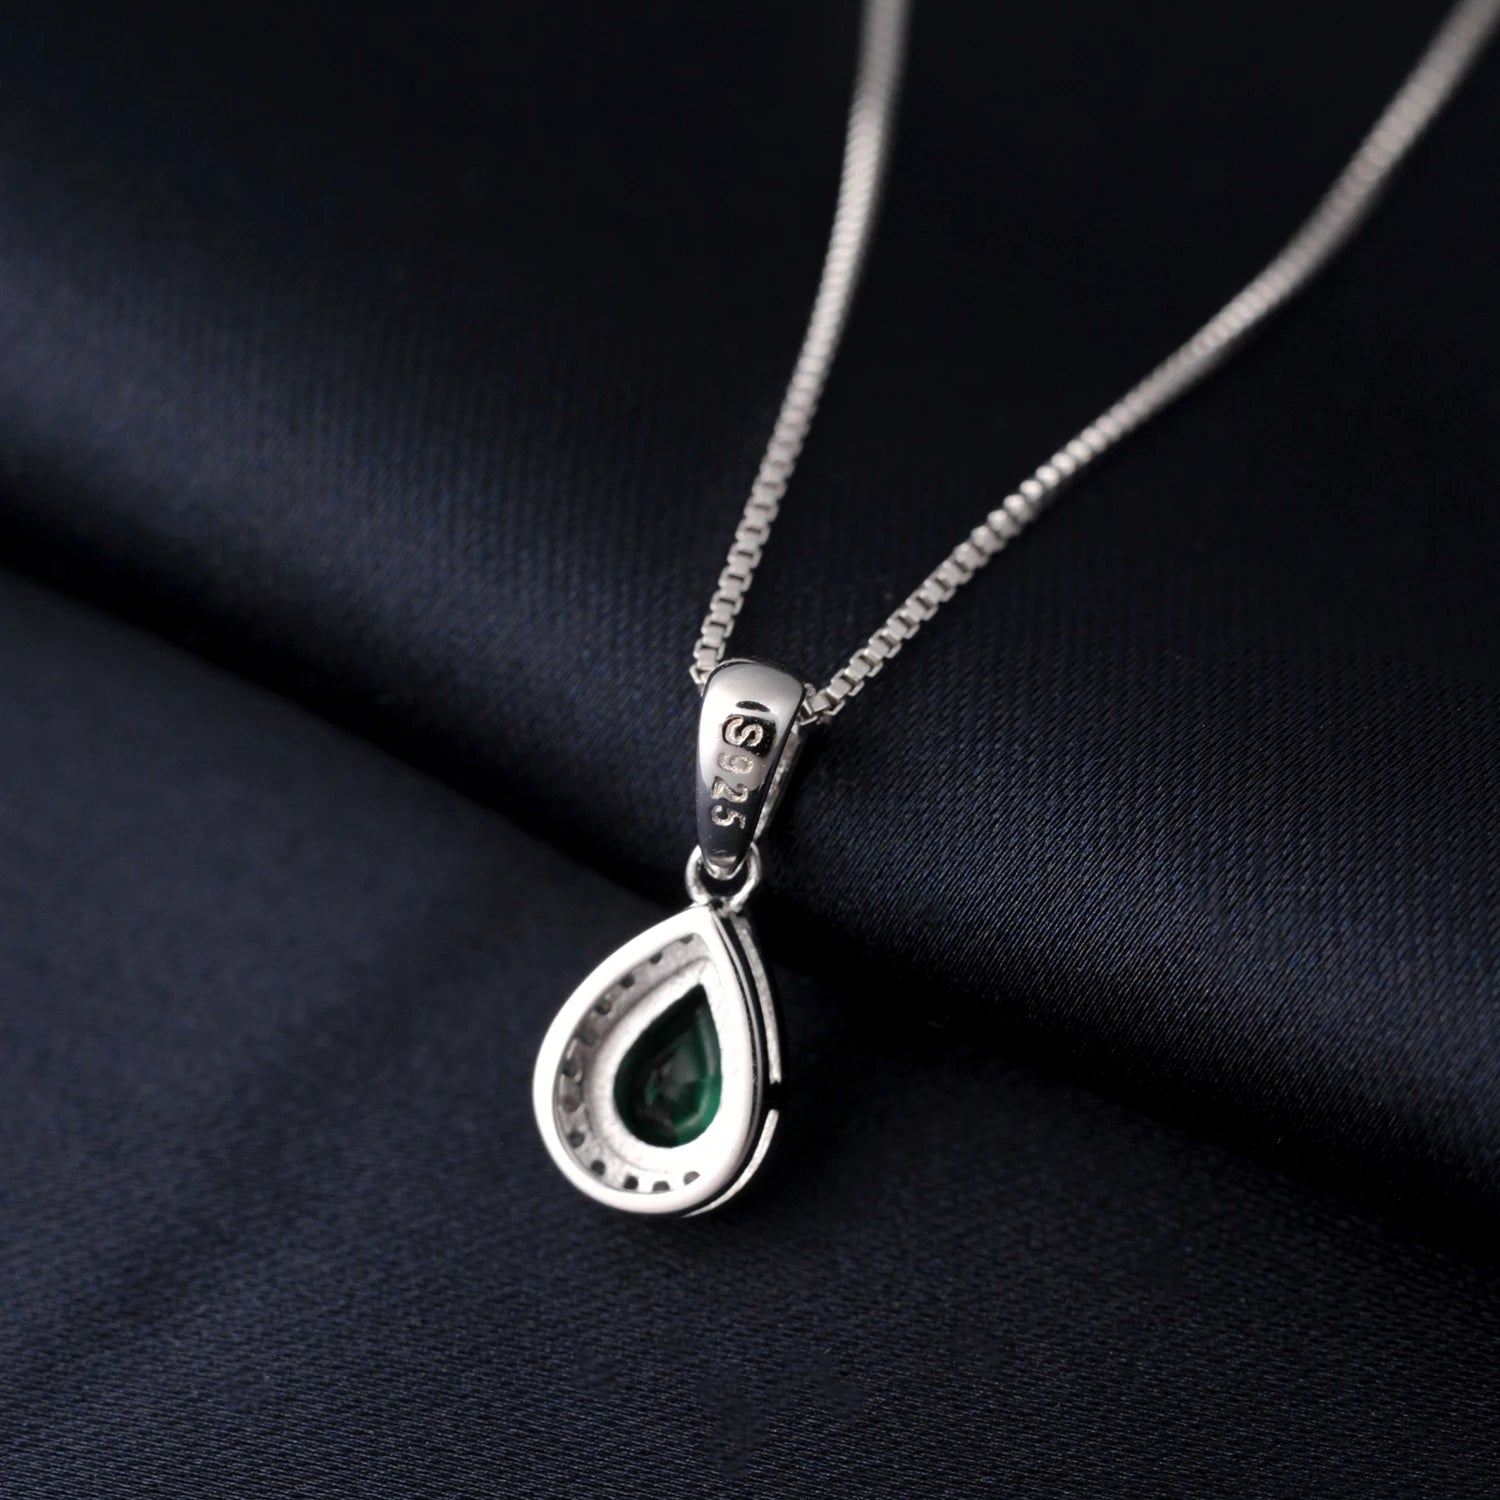 Potiy Pear Simulated Nano Emerald 925 Sterling Silver Pendant Necklace no Chain Women Gemstone Statement Daily mini cute gift